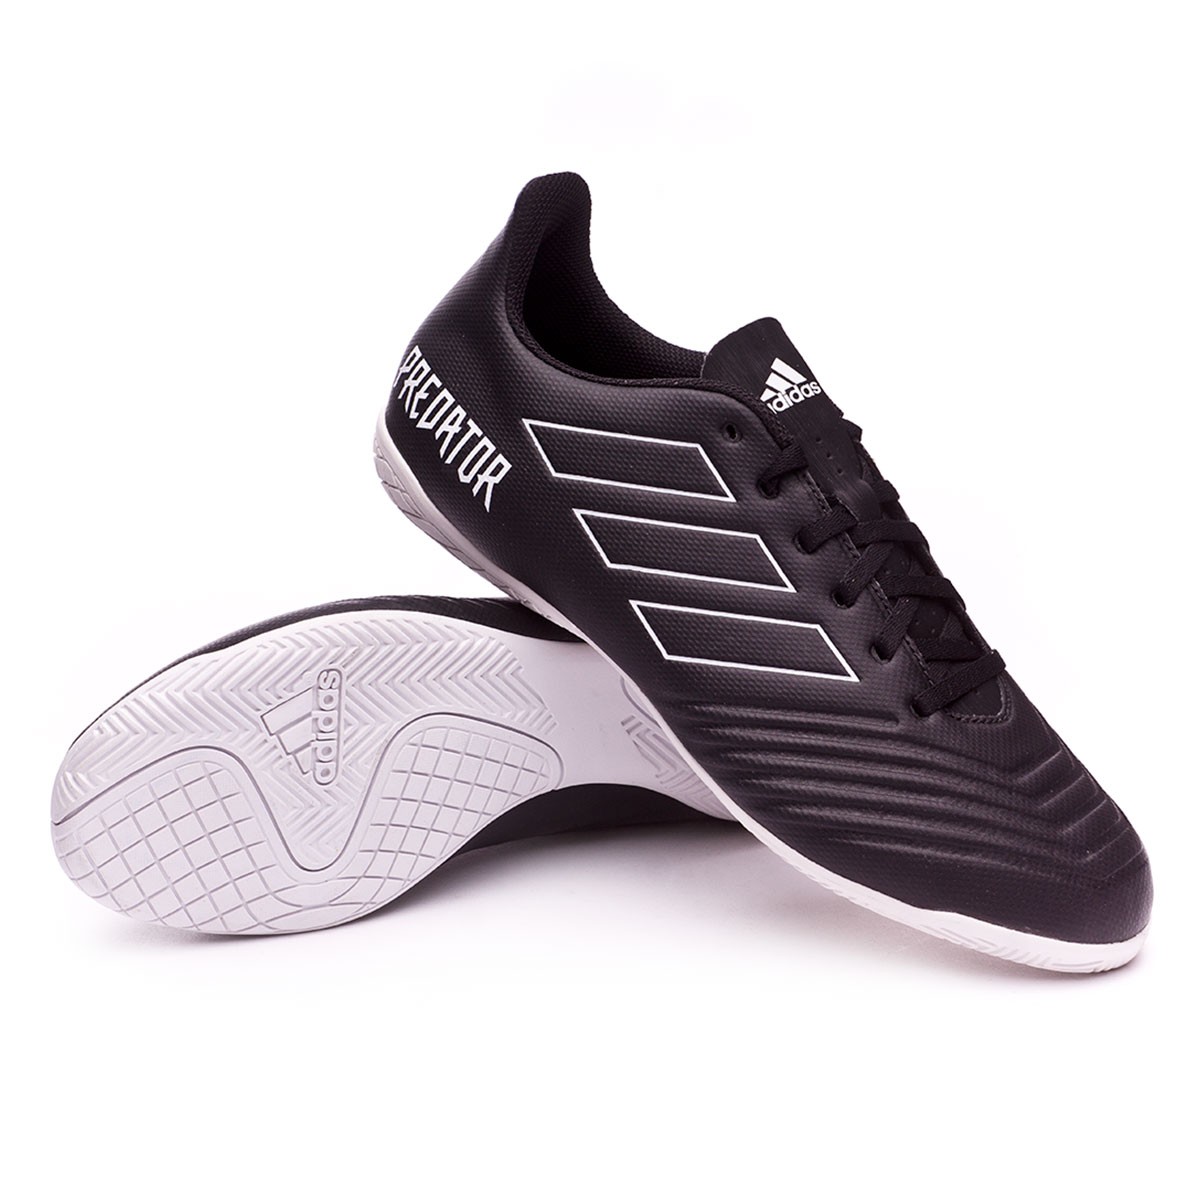 adidas tango indoor soccer shoes